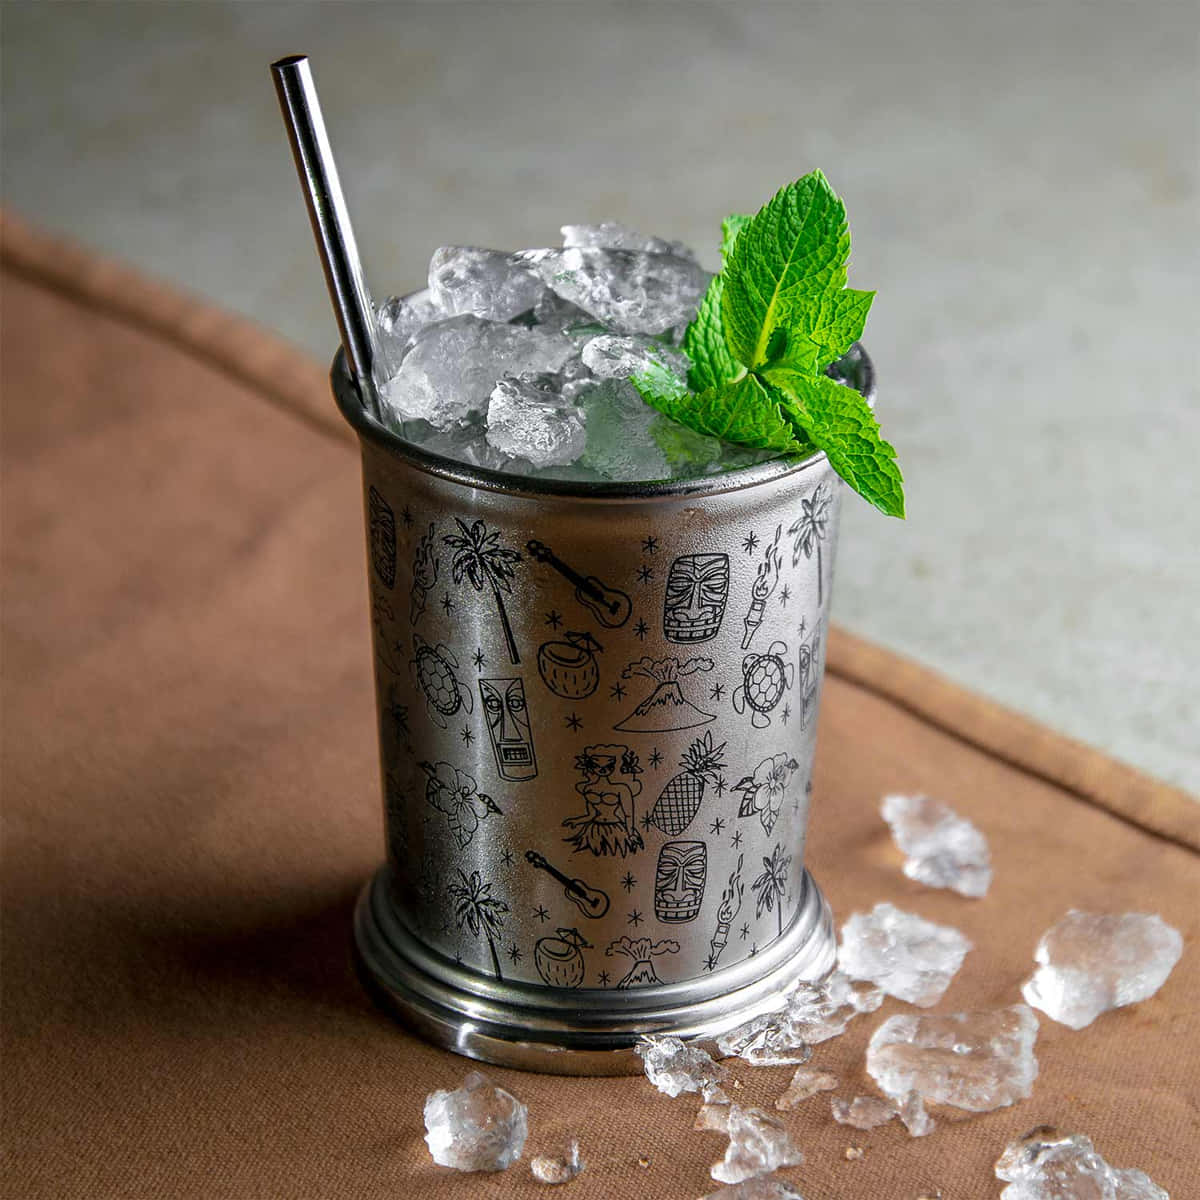 Julep Becher mit Tiki Motiven verziert ist mit Mint Julep Ccktail gefüllt